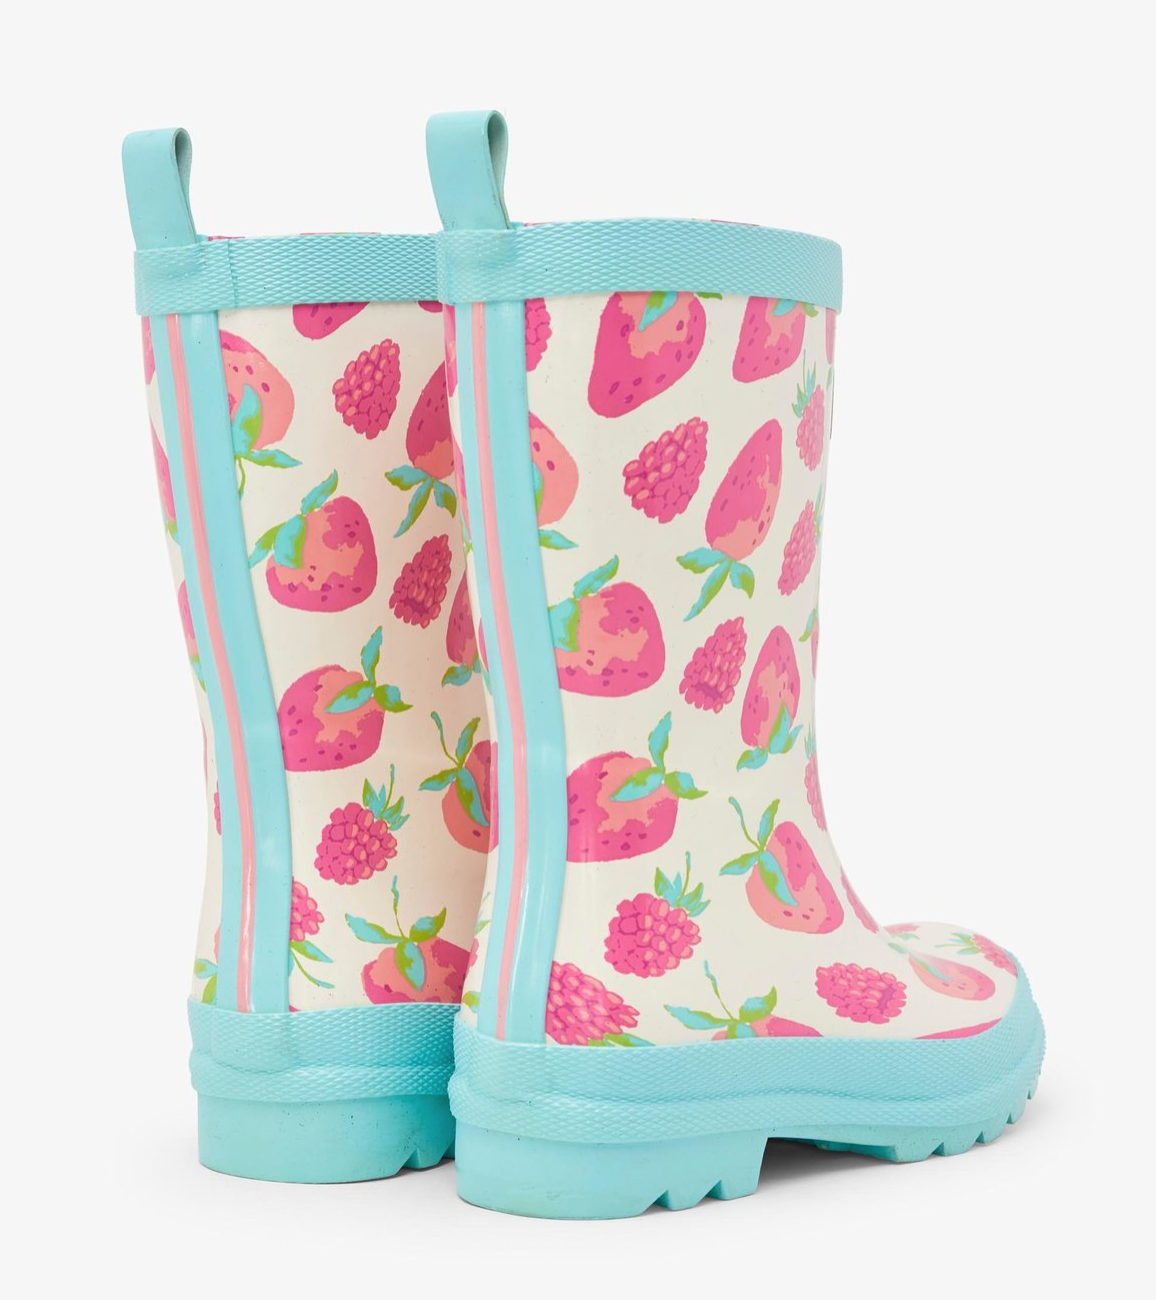 Berries Shiny Rain Boots